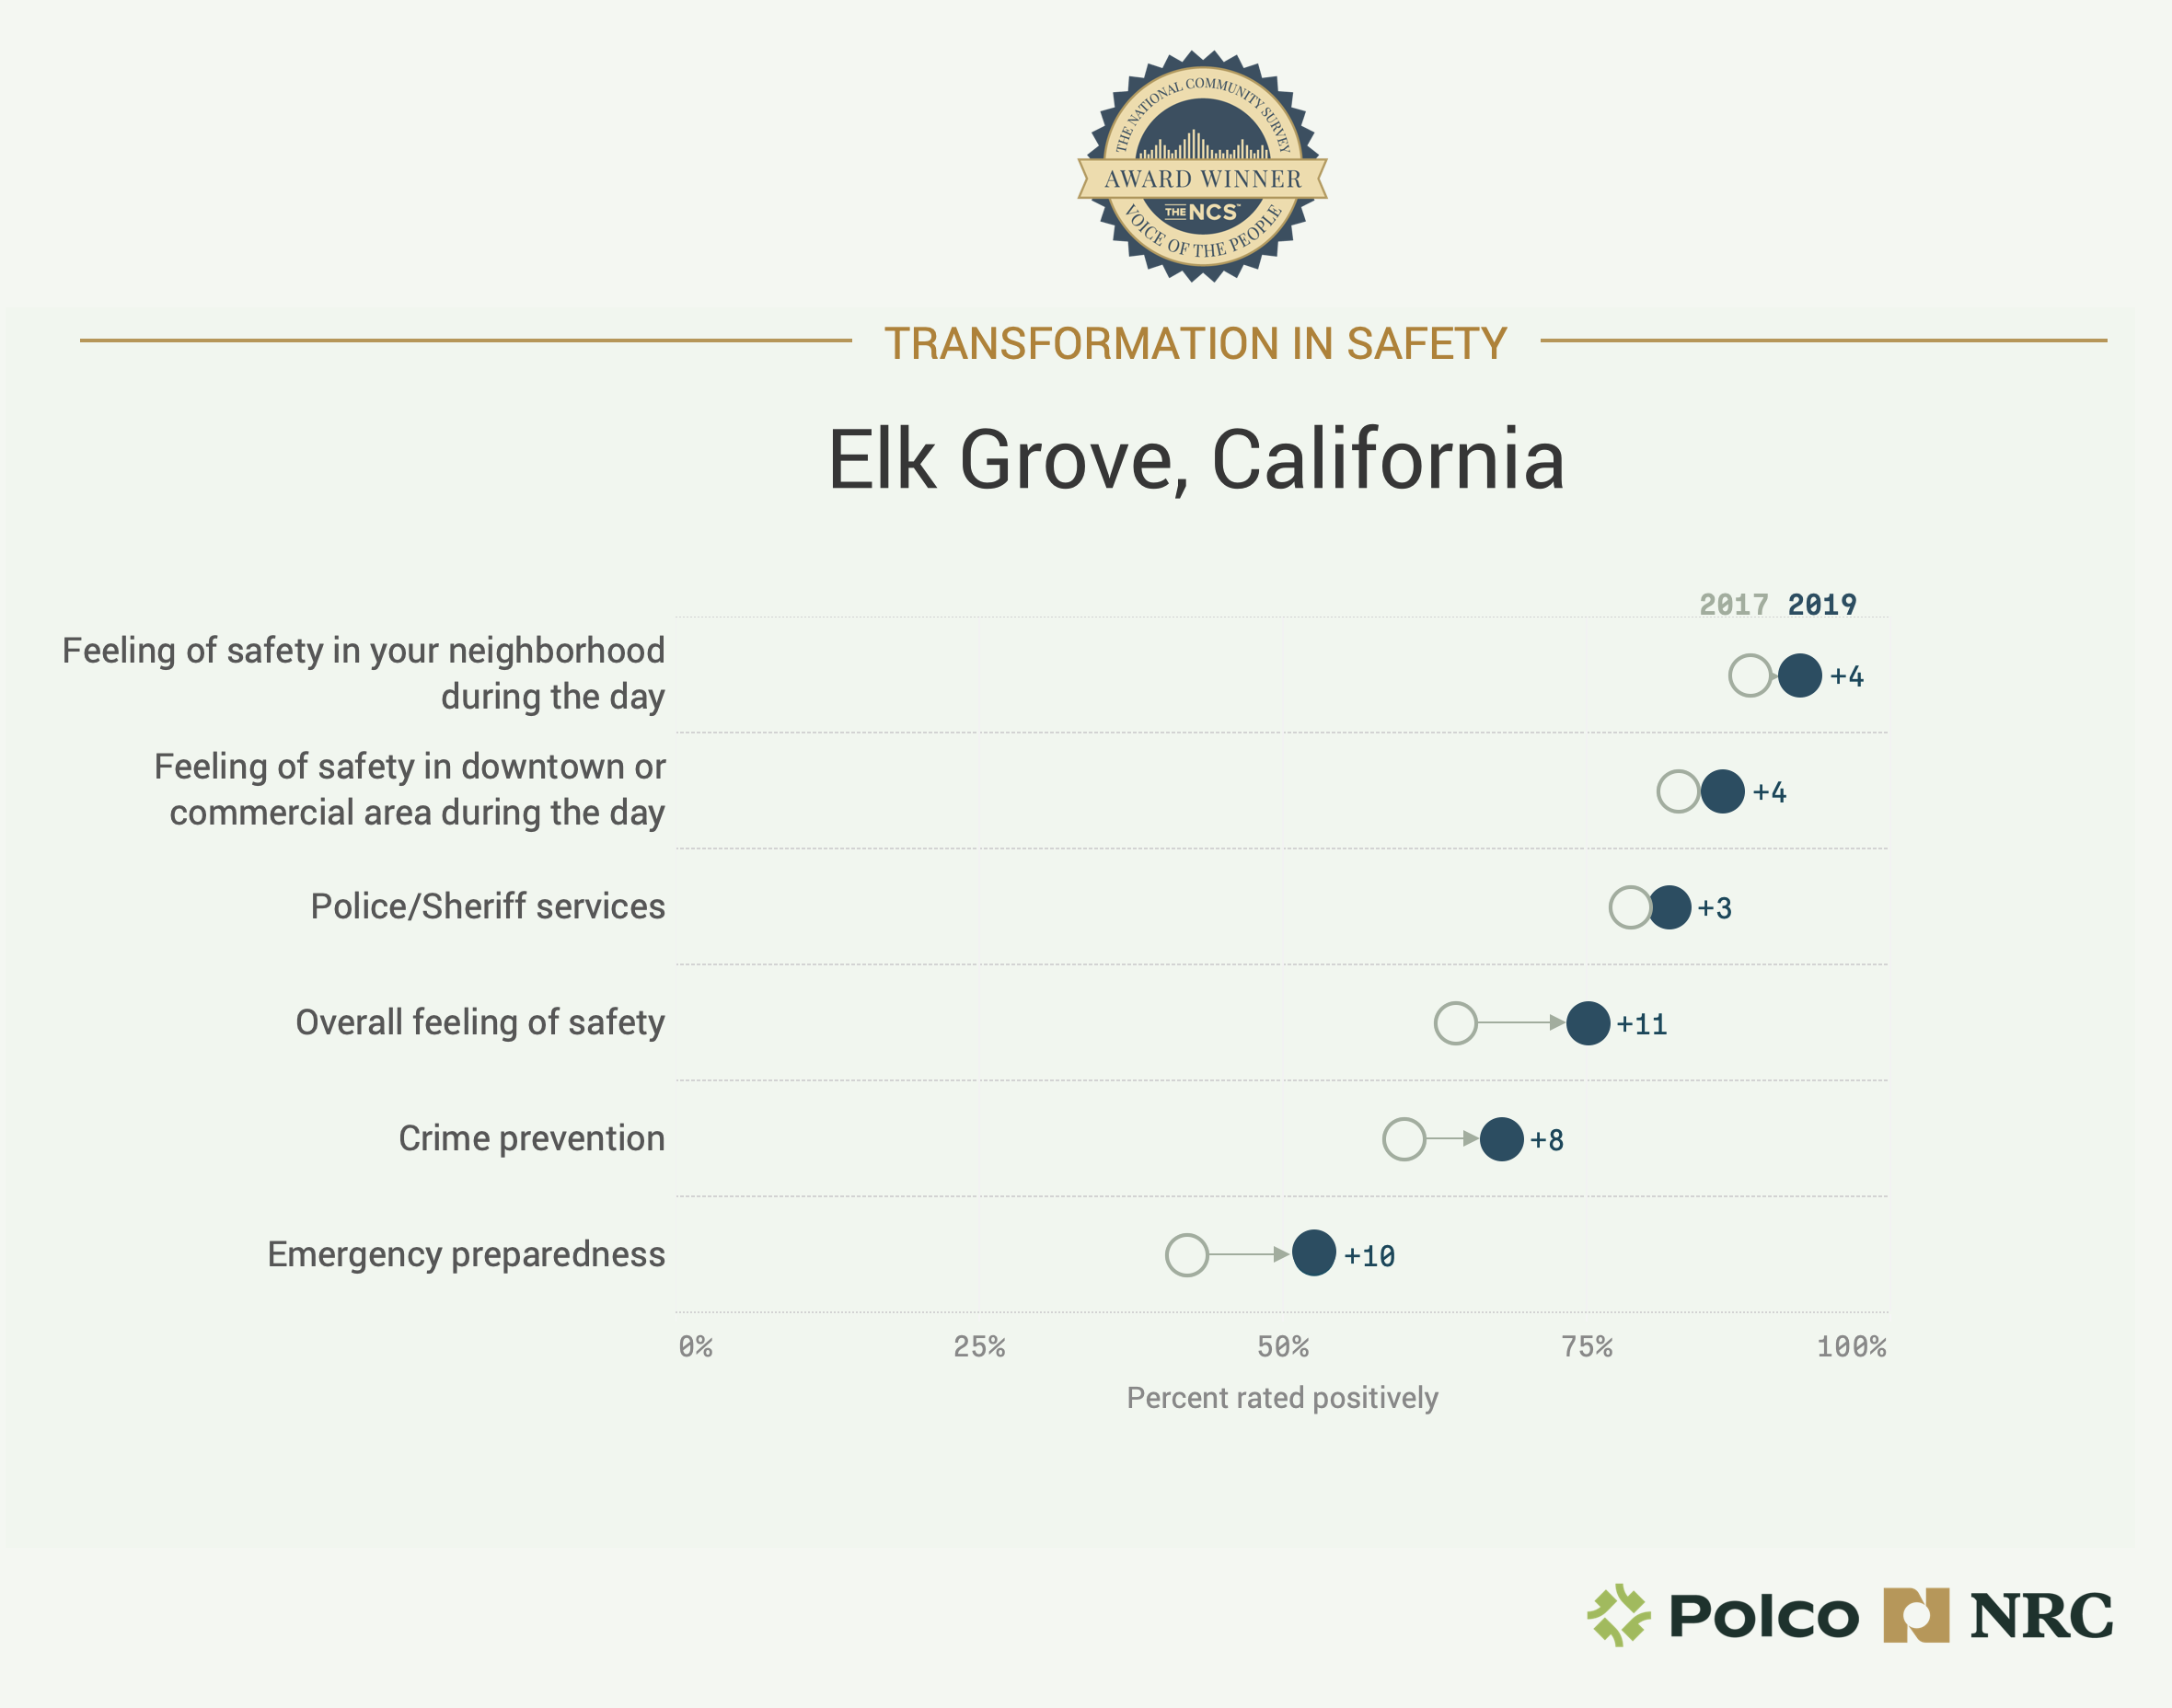 Elk Grove's Transformation in Safety 